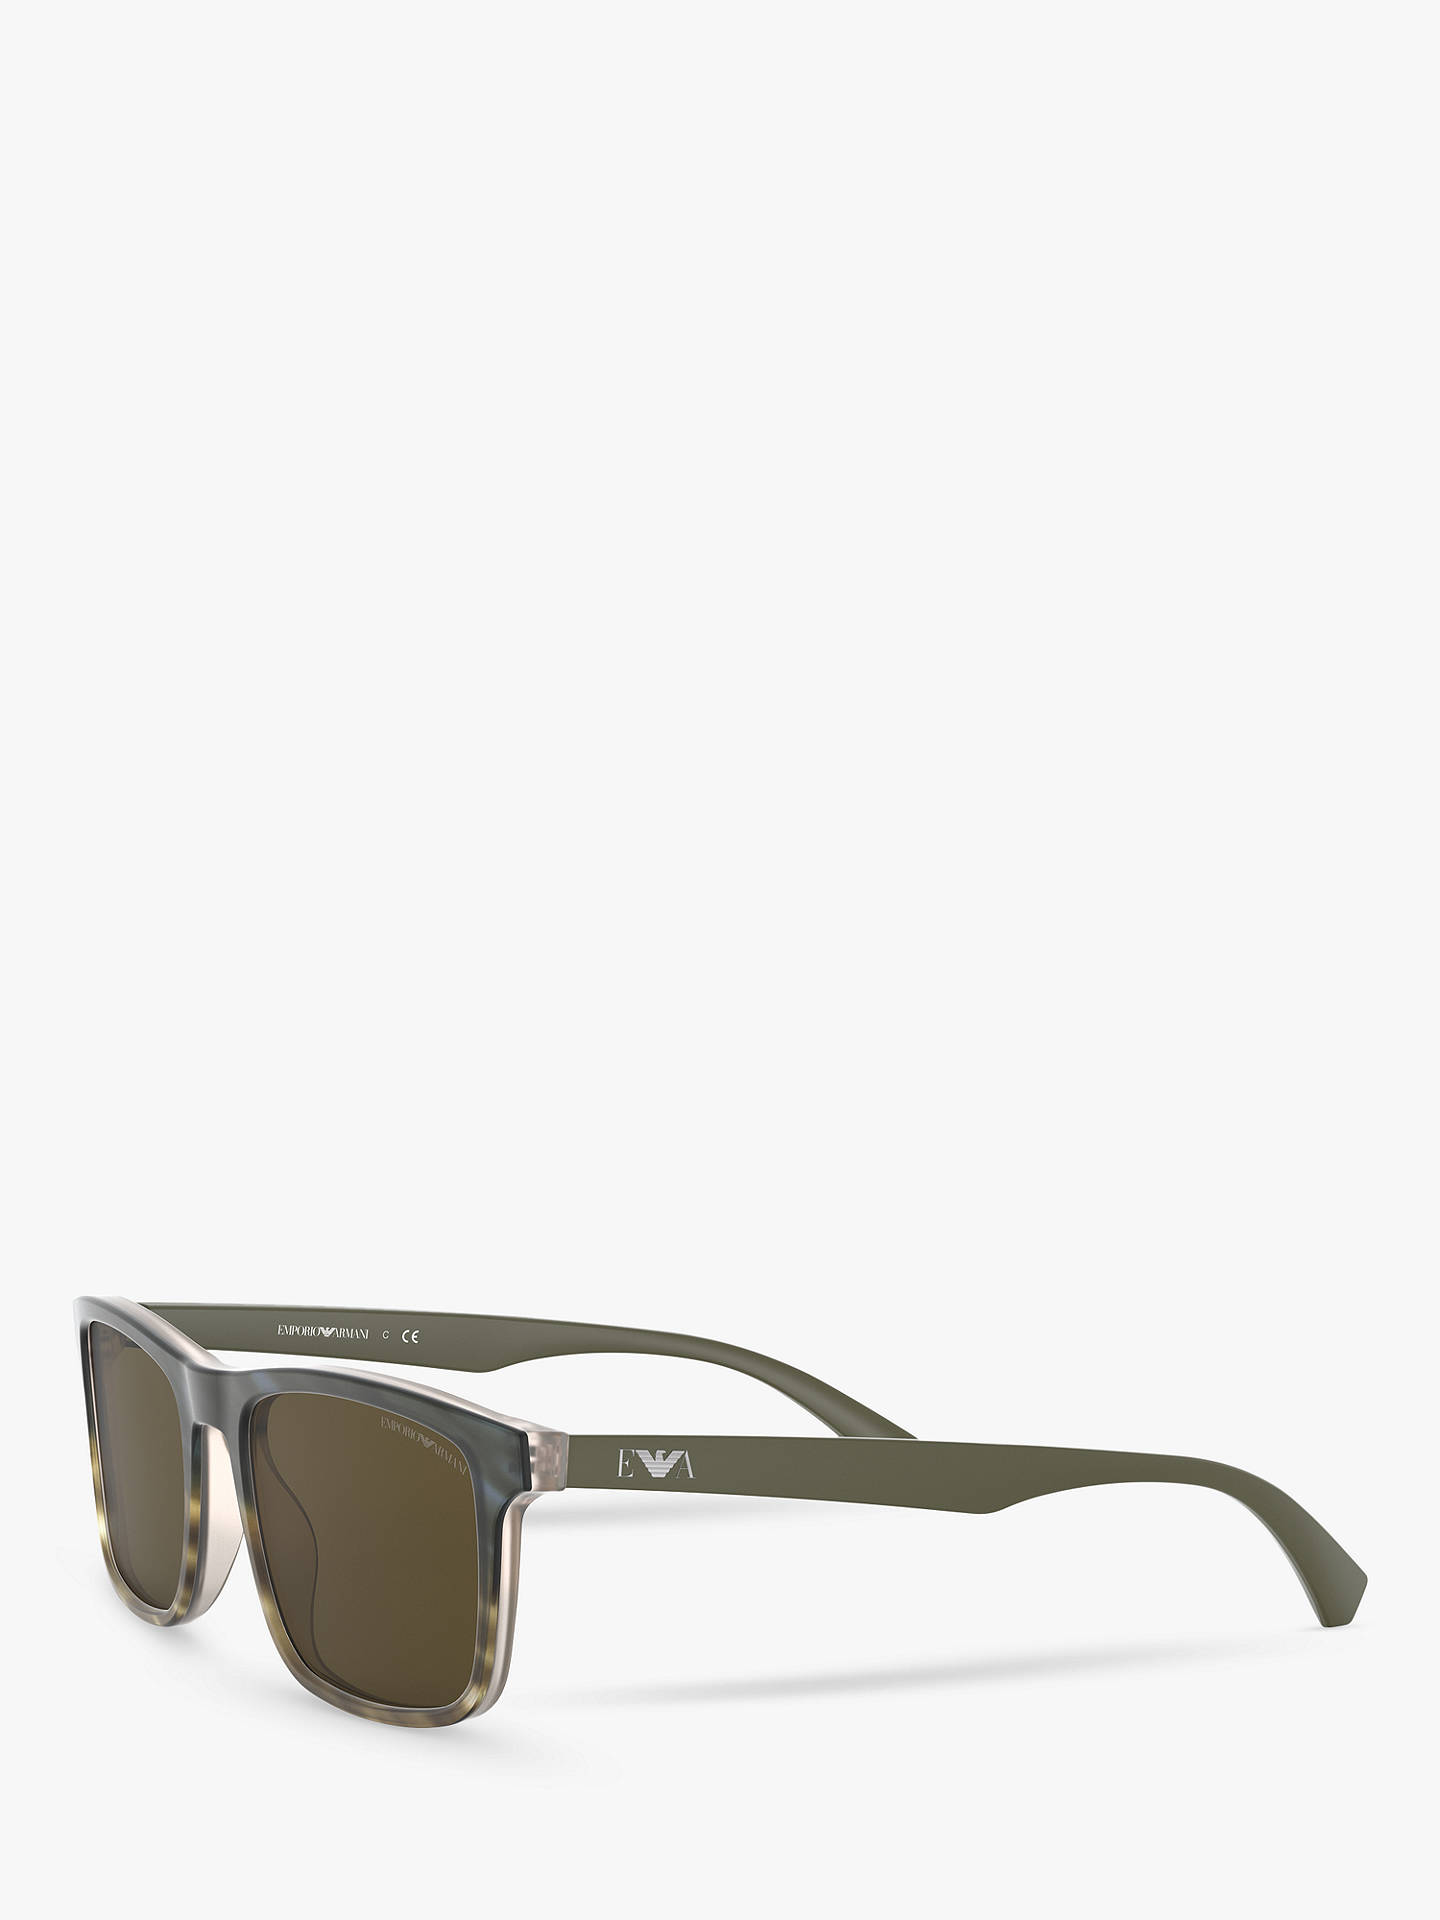 Emporio Armani EA4137 Men's Rectangular Sunglasses, Matte Khaki/Brown ...